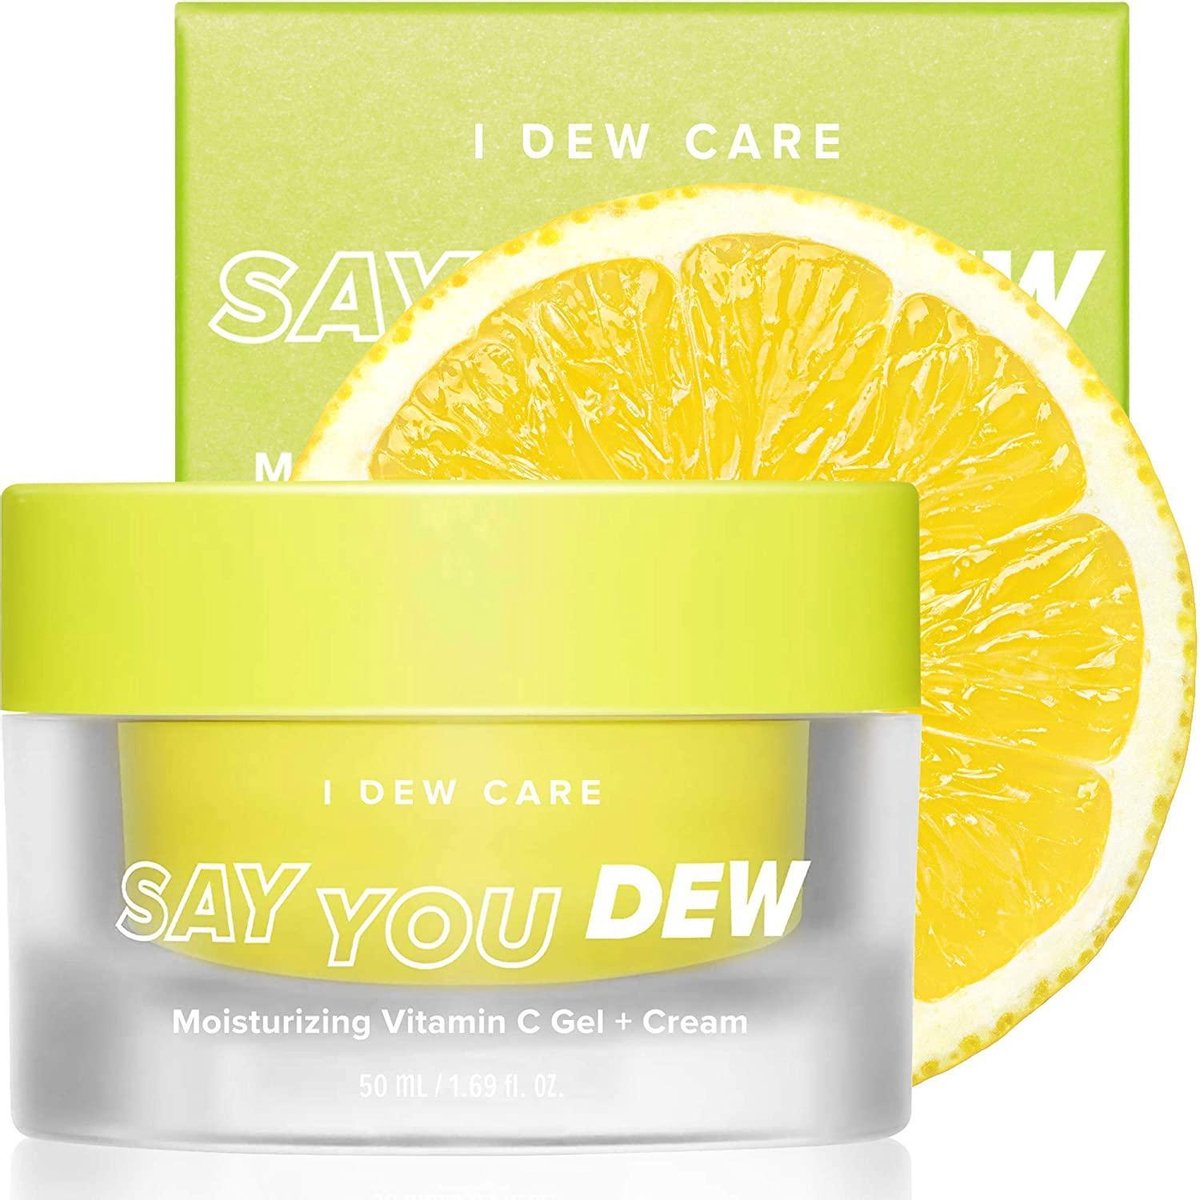 I Dew Care Say You Dew Moisturizing Vitamin C Gel + Cream 50 ml - Korean K Beauty New 2021 - Banana Extract - Niacinamide - Vitamin C - Glycerin - Skin Brightening - Vegan & Cruelty Free